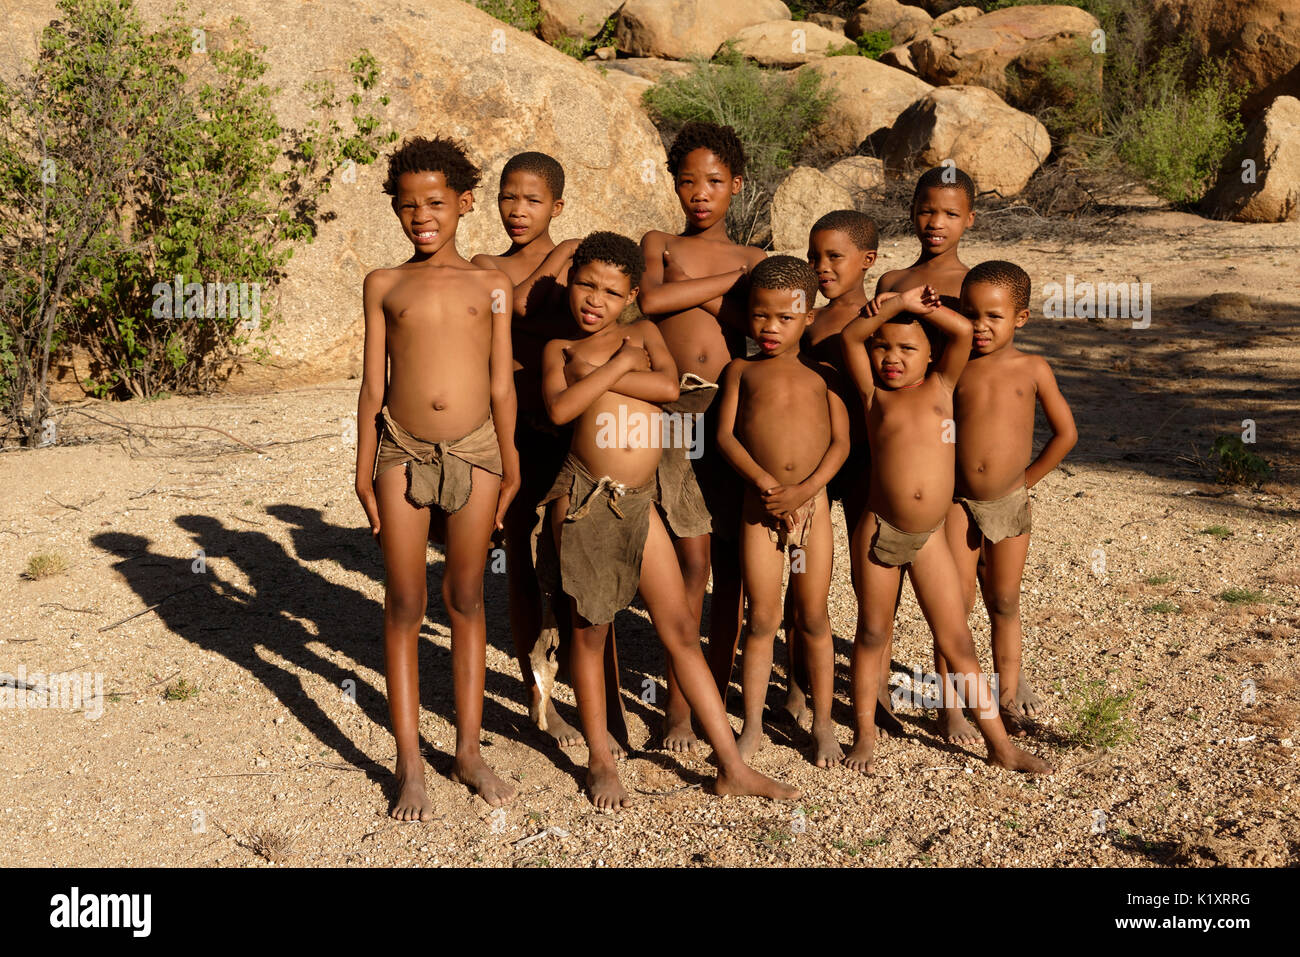 san-living-museum-on-farm-omandumba-granja-de-huespedes-san-children-fanerio-en-traje-tradicional-distrito-de-omaruru-region-de-erongo-namibia-k1xrrg.jpg